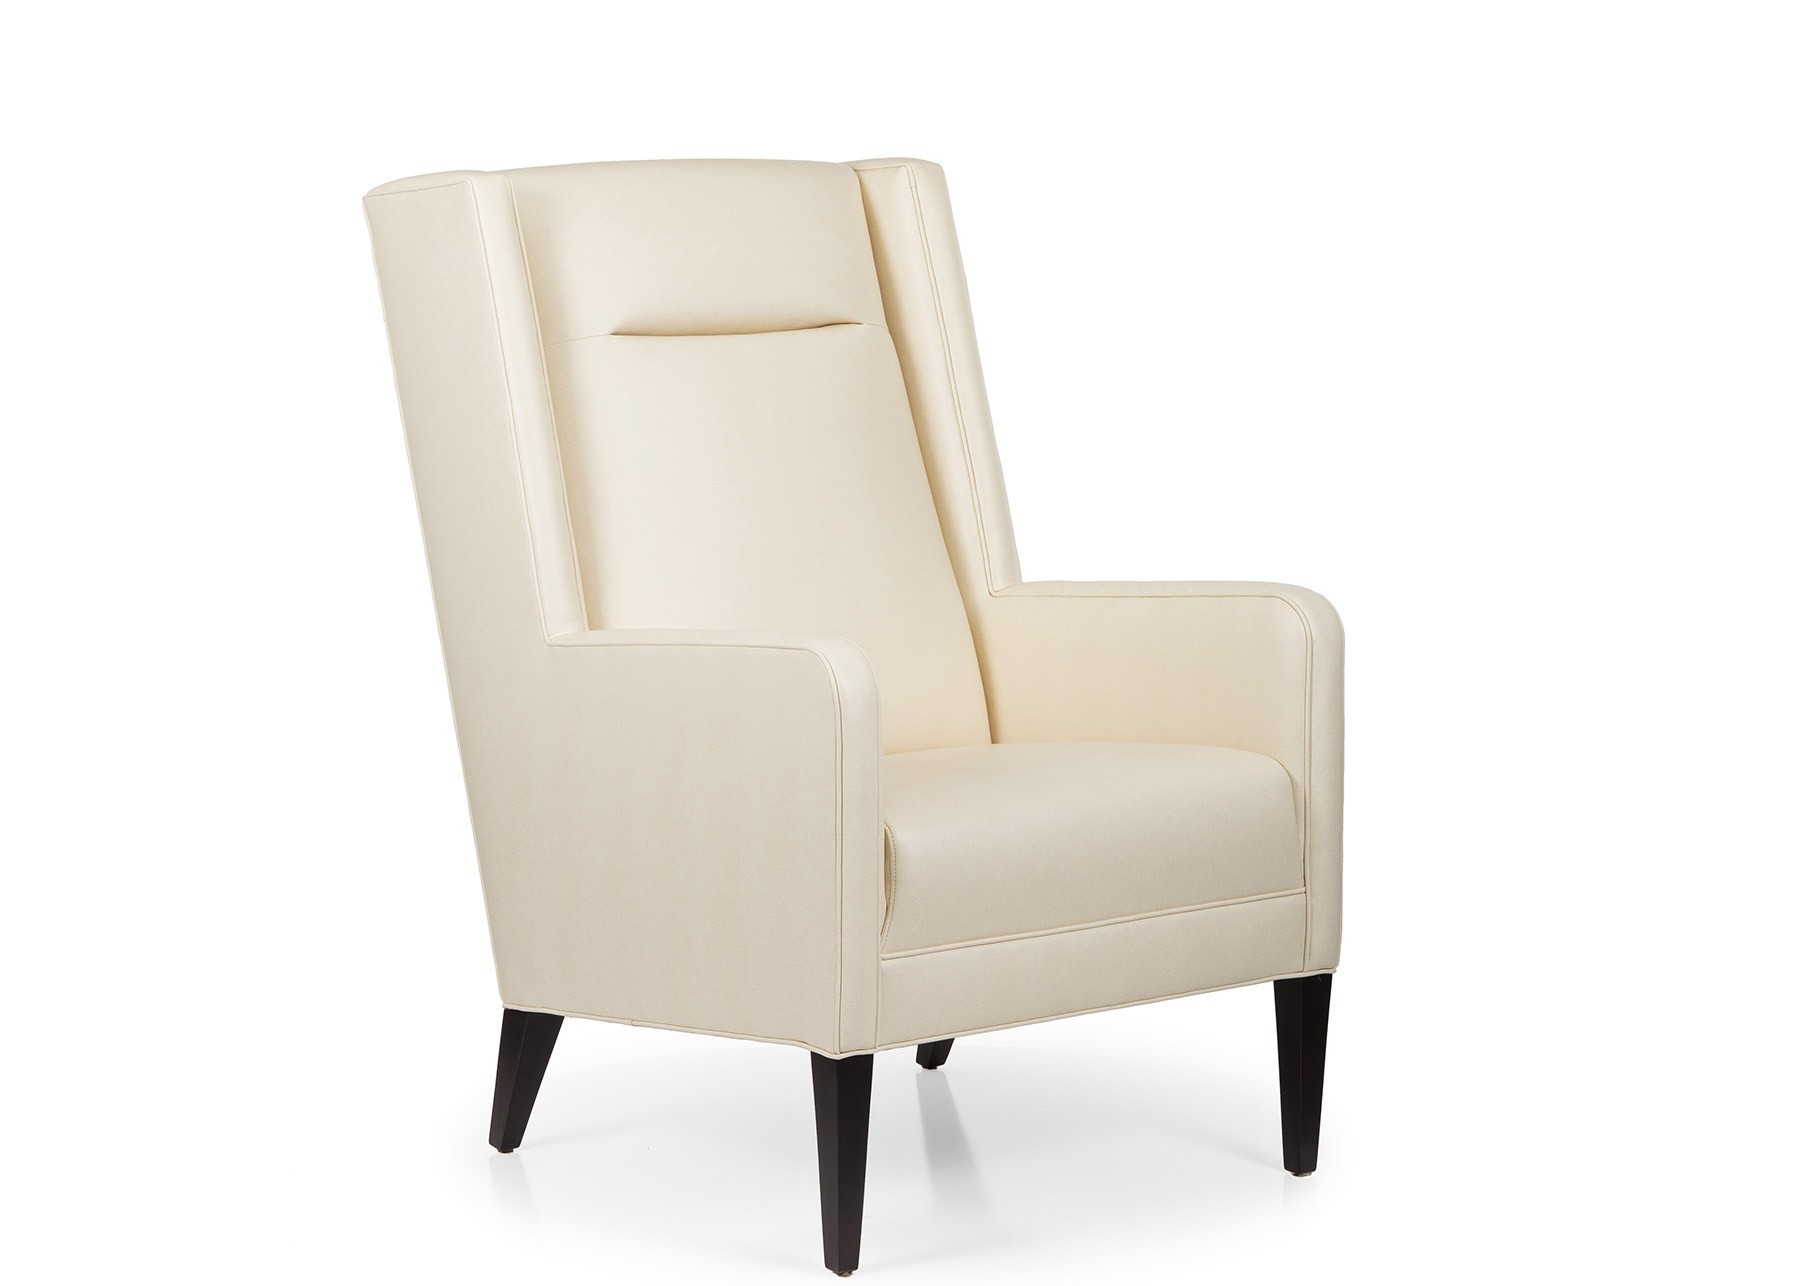 Cabot Wrenn Loyola Lounge Chair